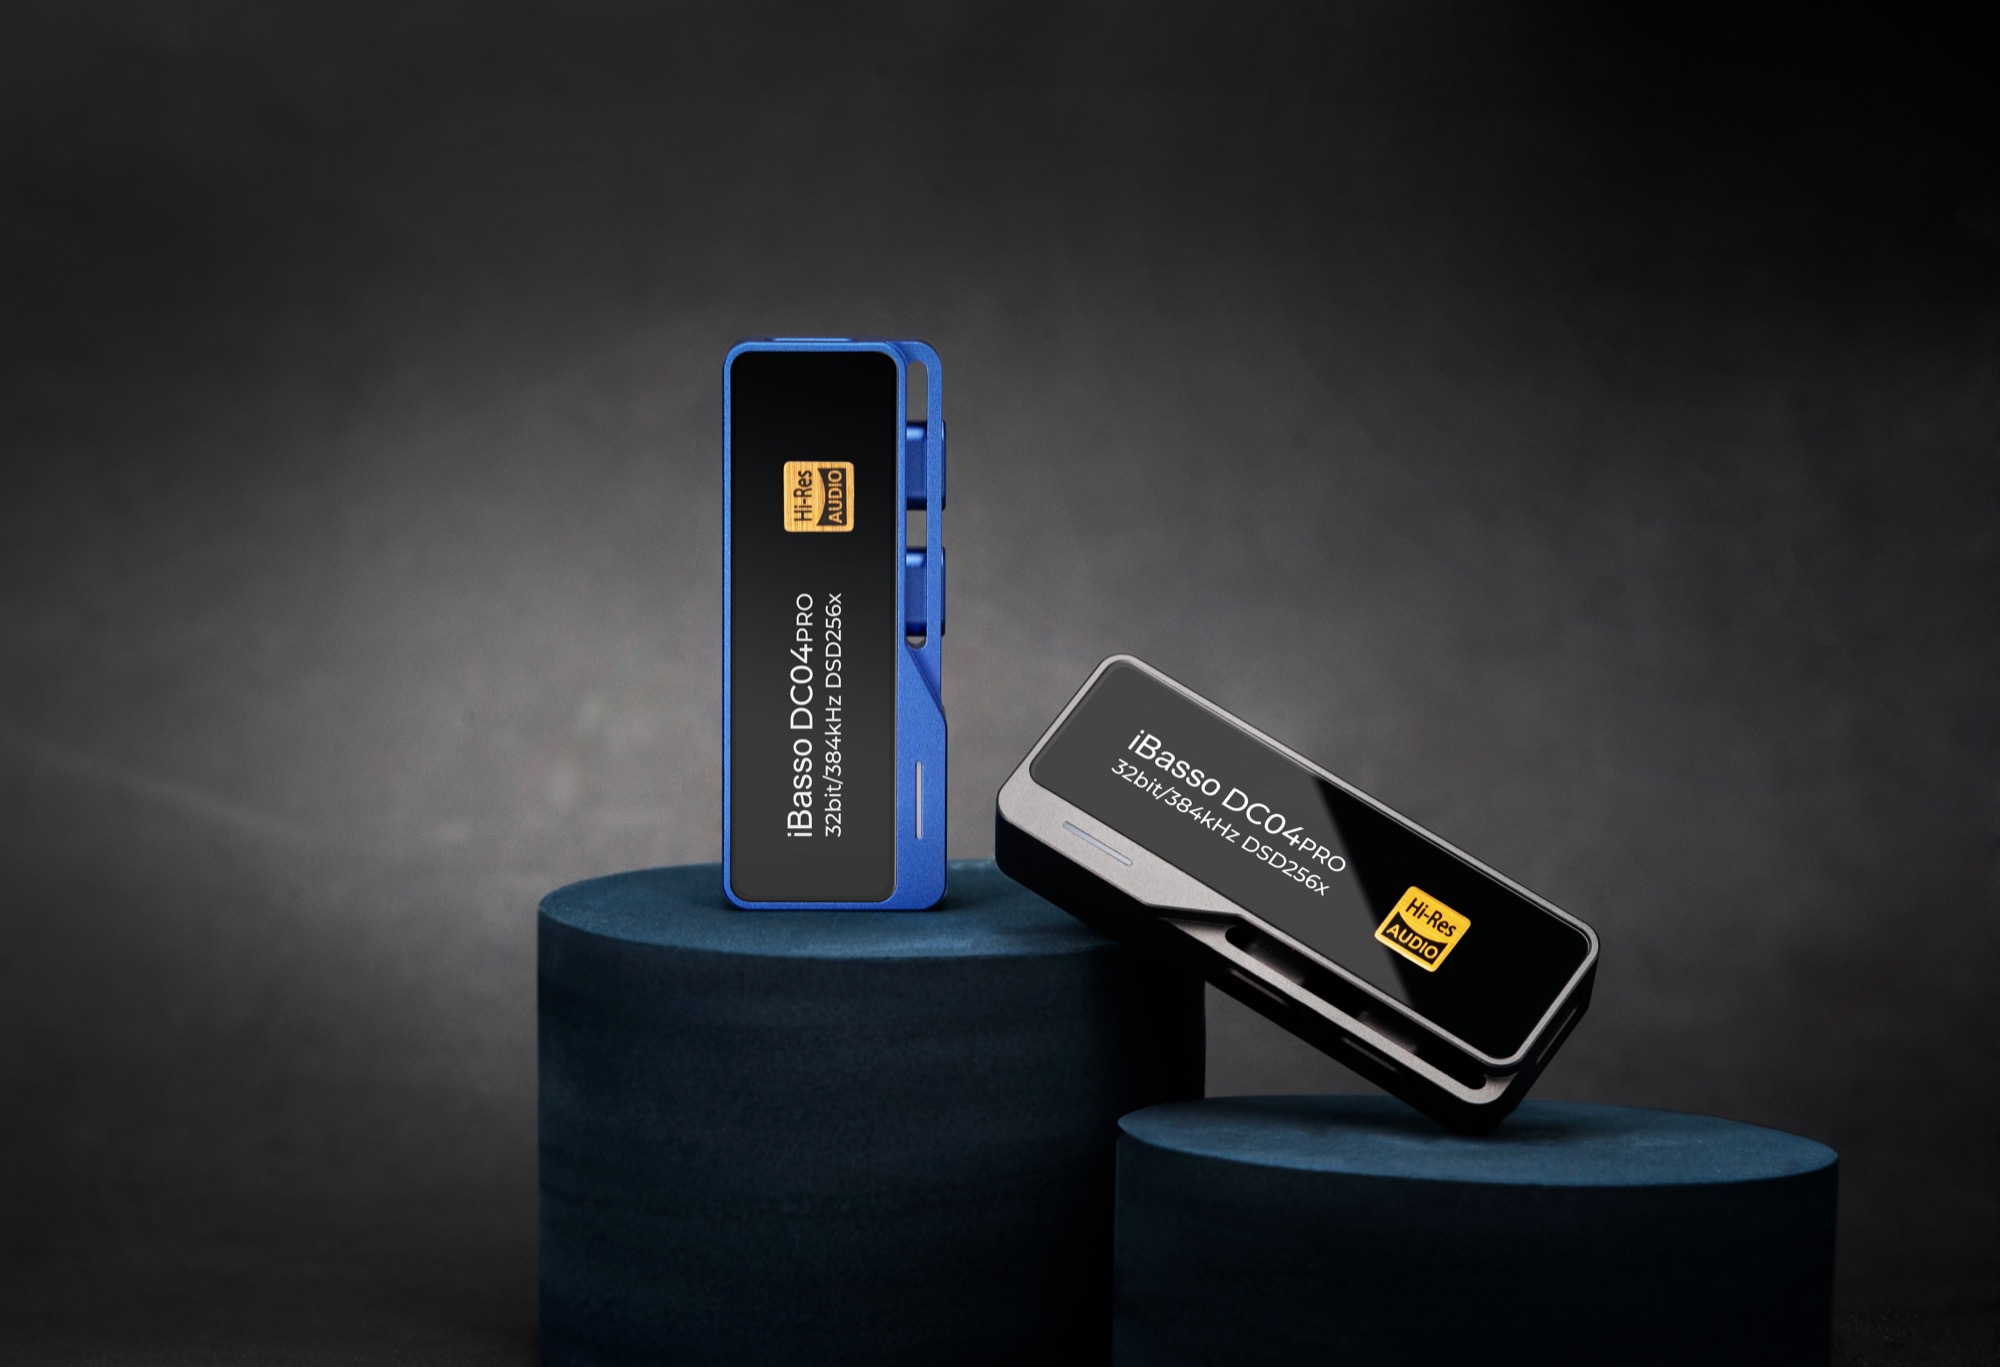 iBasso DC04 Pro 3.5mm / 4.4mm USB Amp / DAC